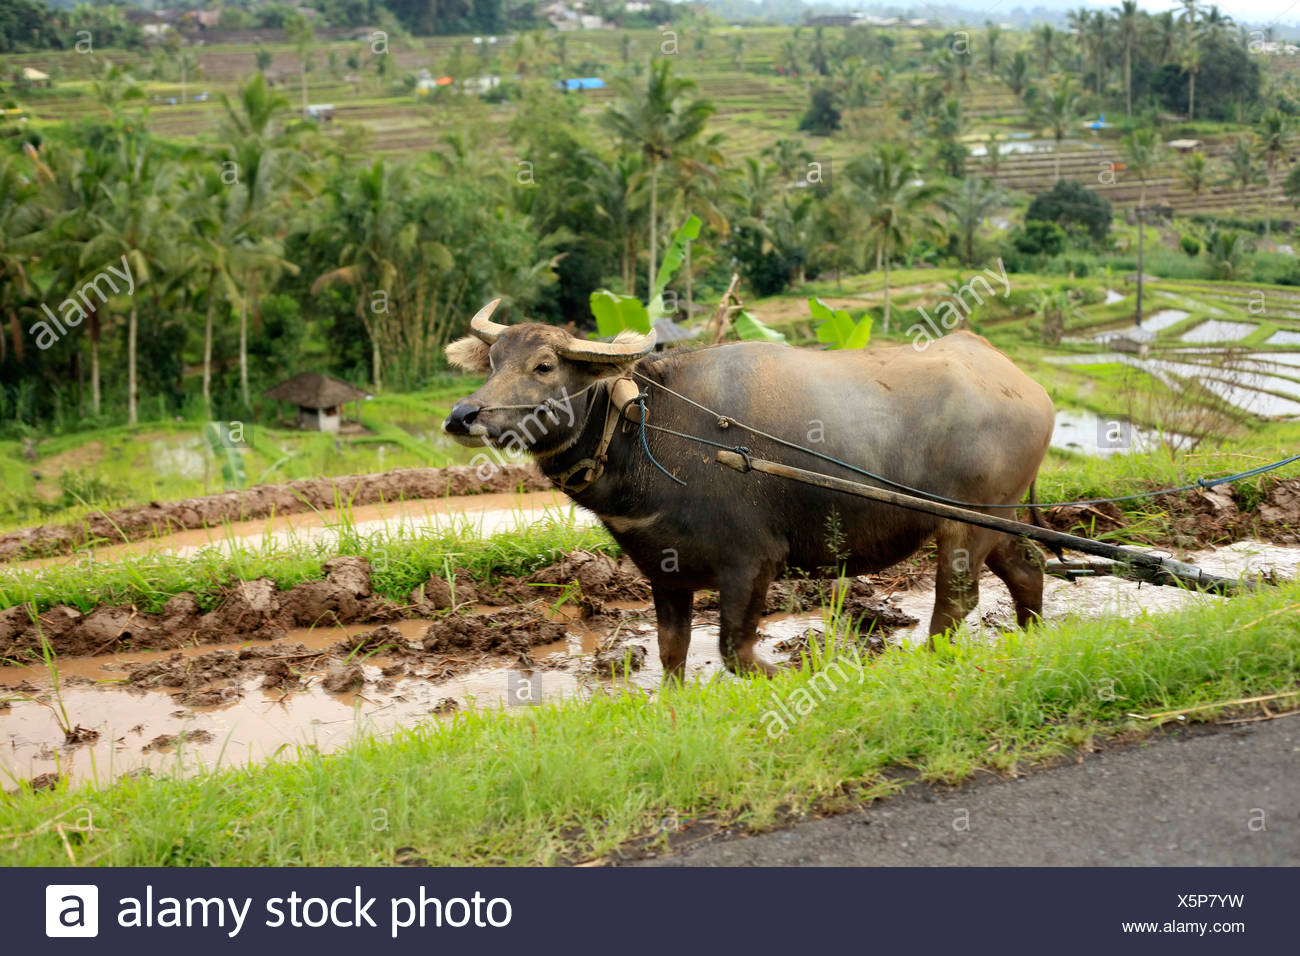 Working buffalo Stock Photo - Alamy